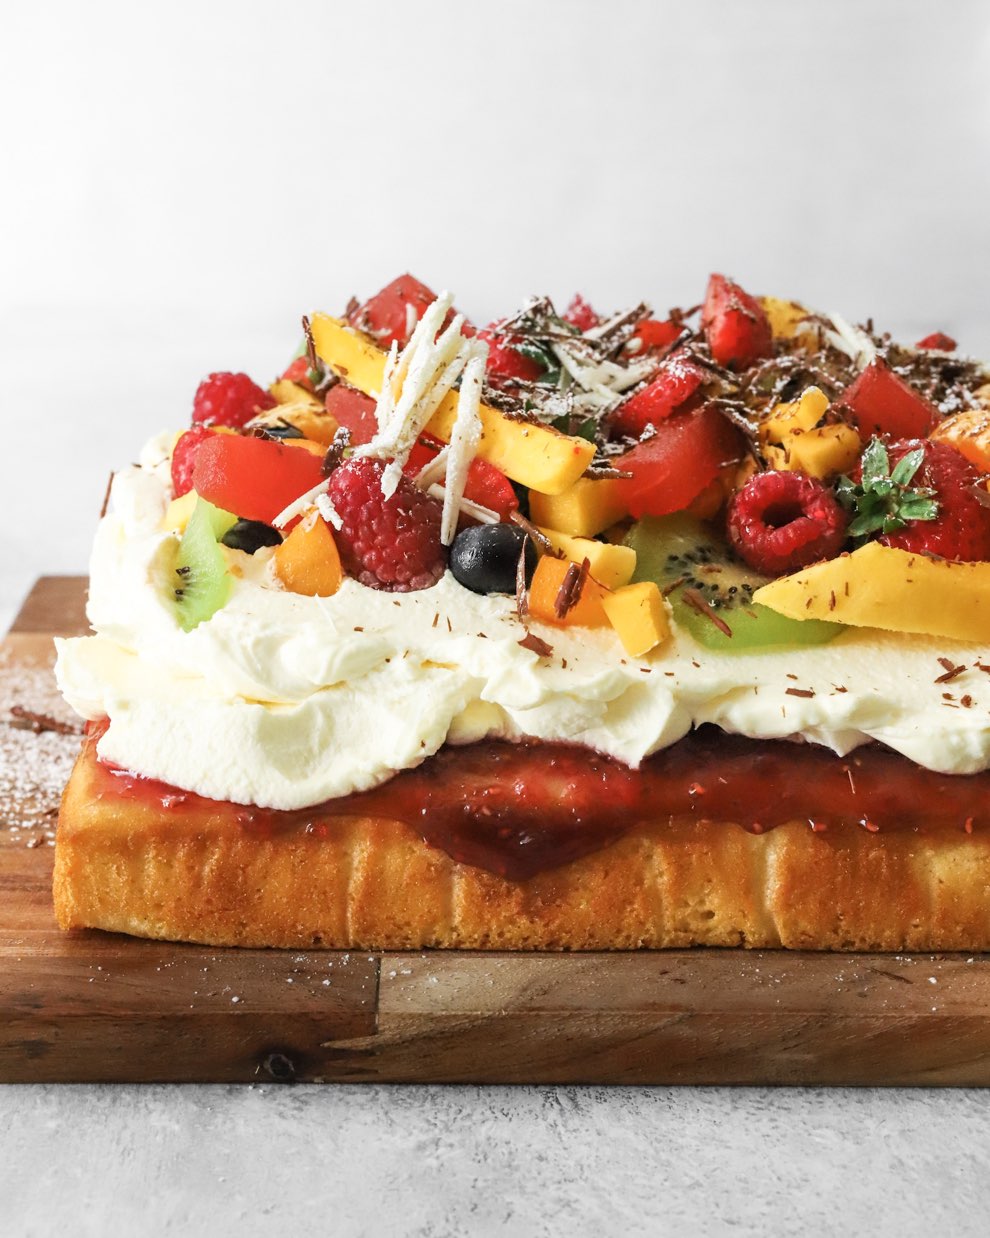 Olenko's Kitchen » Blog Archive » Olenko's Raw-Vegan-Fruit Birthday Cake